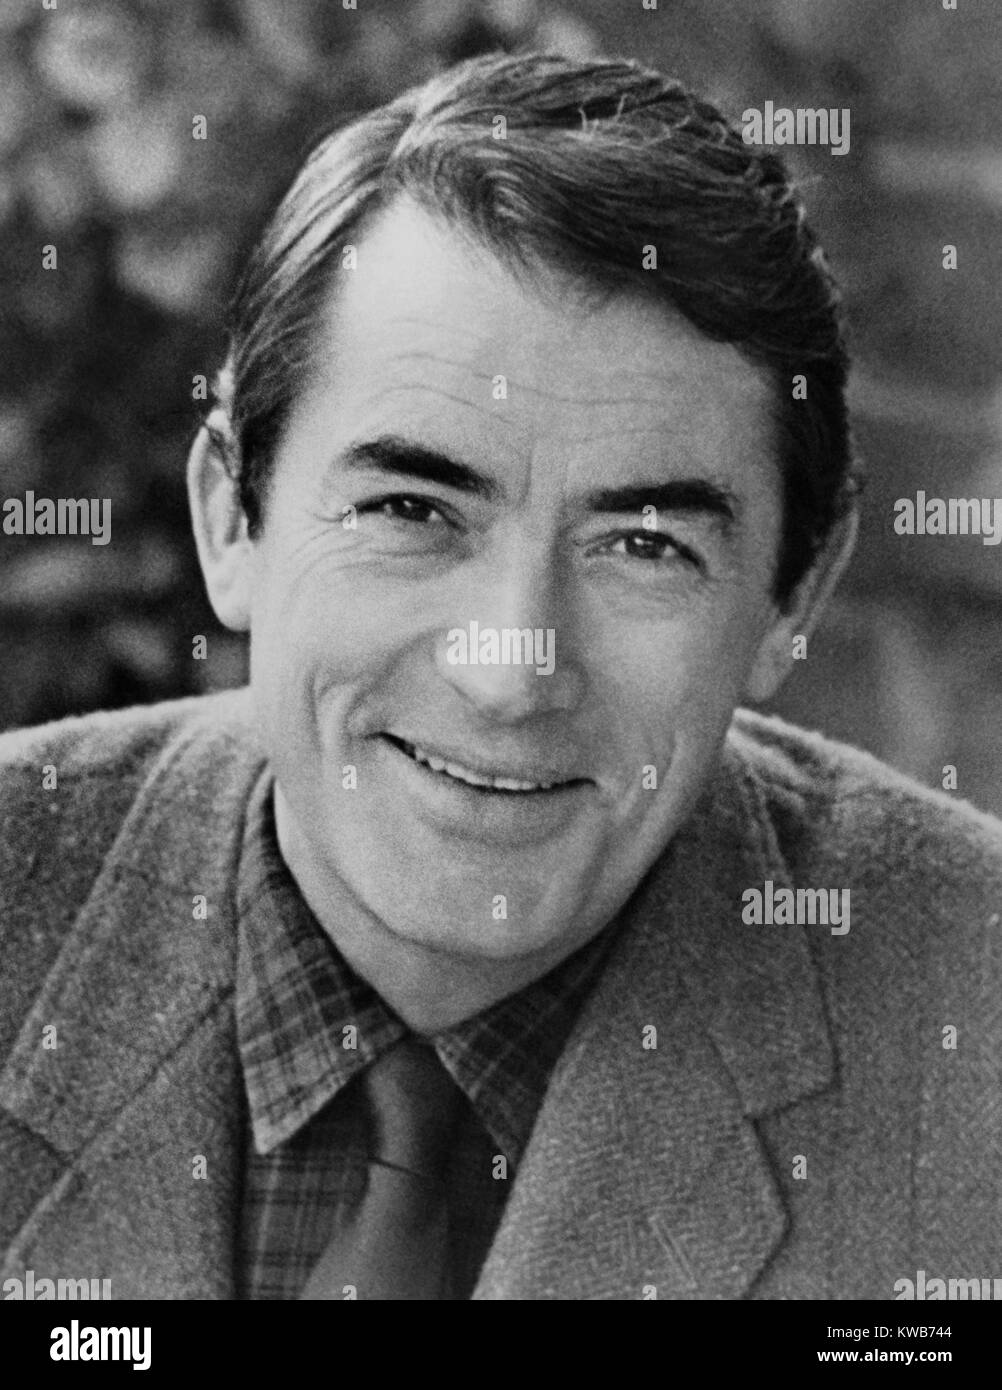 CAPTAIN NEWMAN, M.D., Gregory Peck, 1963 Stock Photo